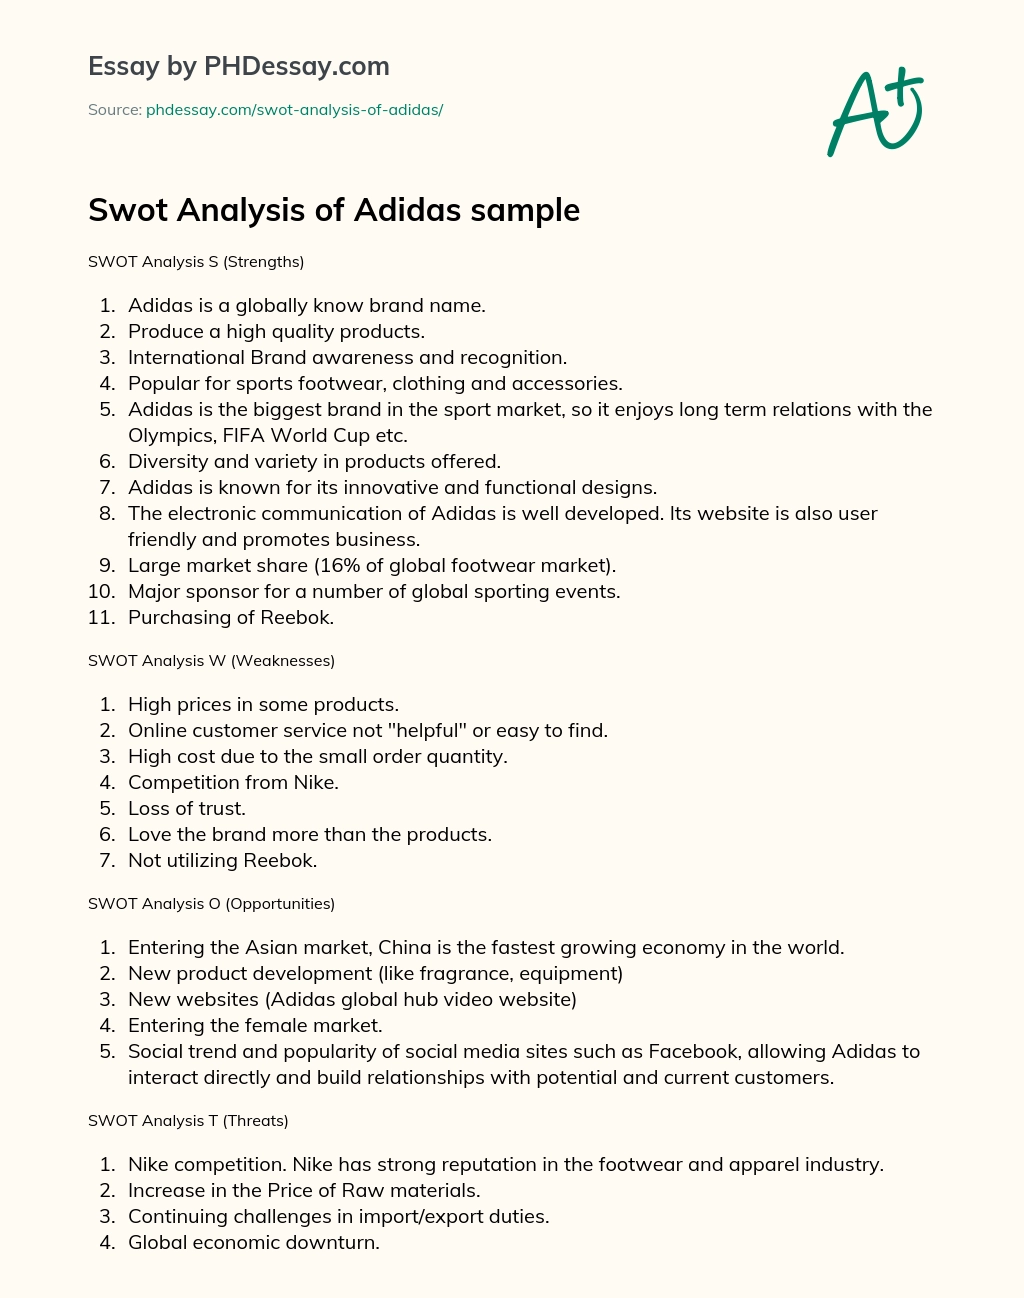 Swot Analysis of Adidas sample essay